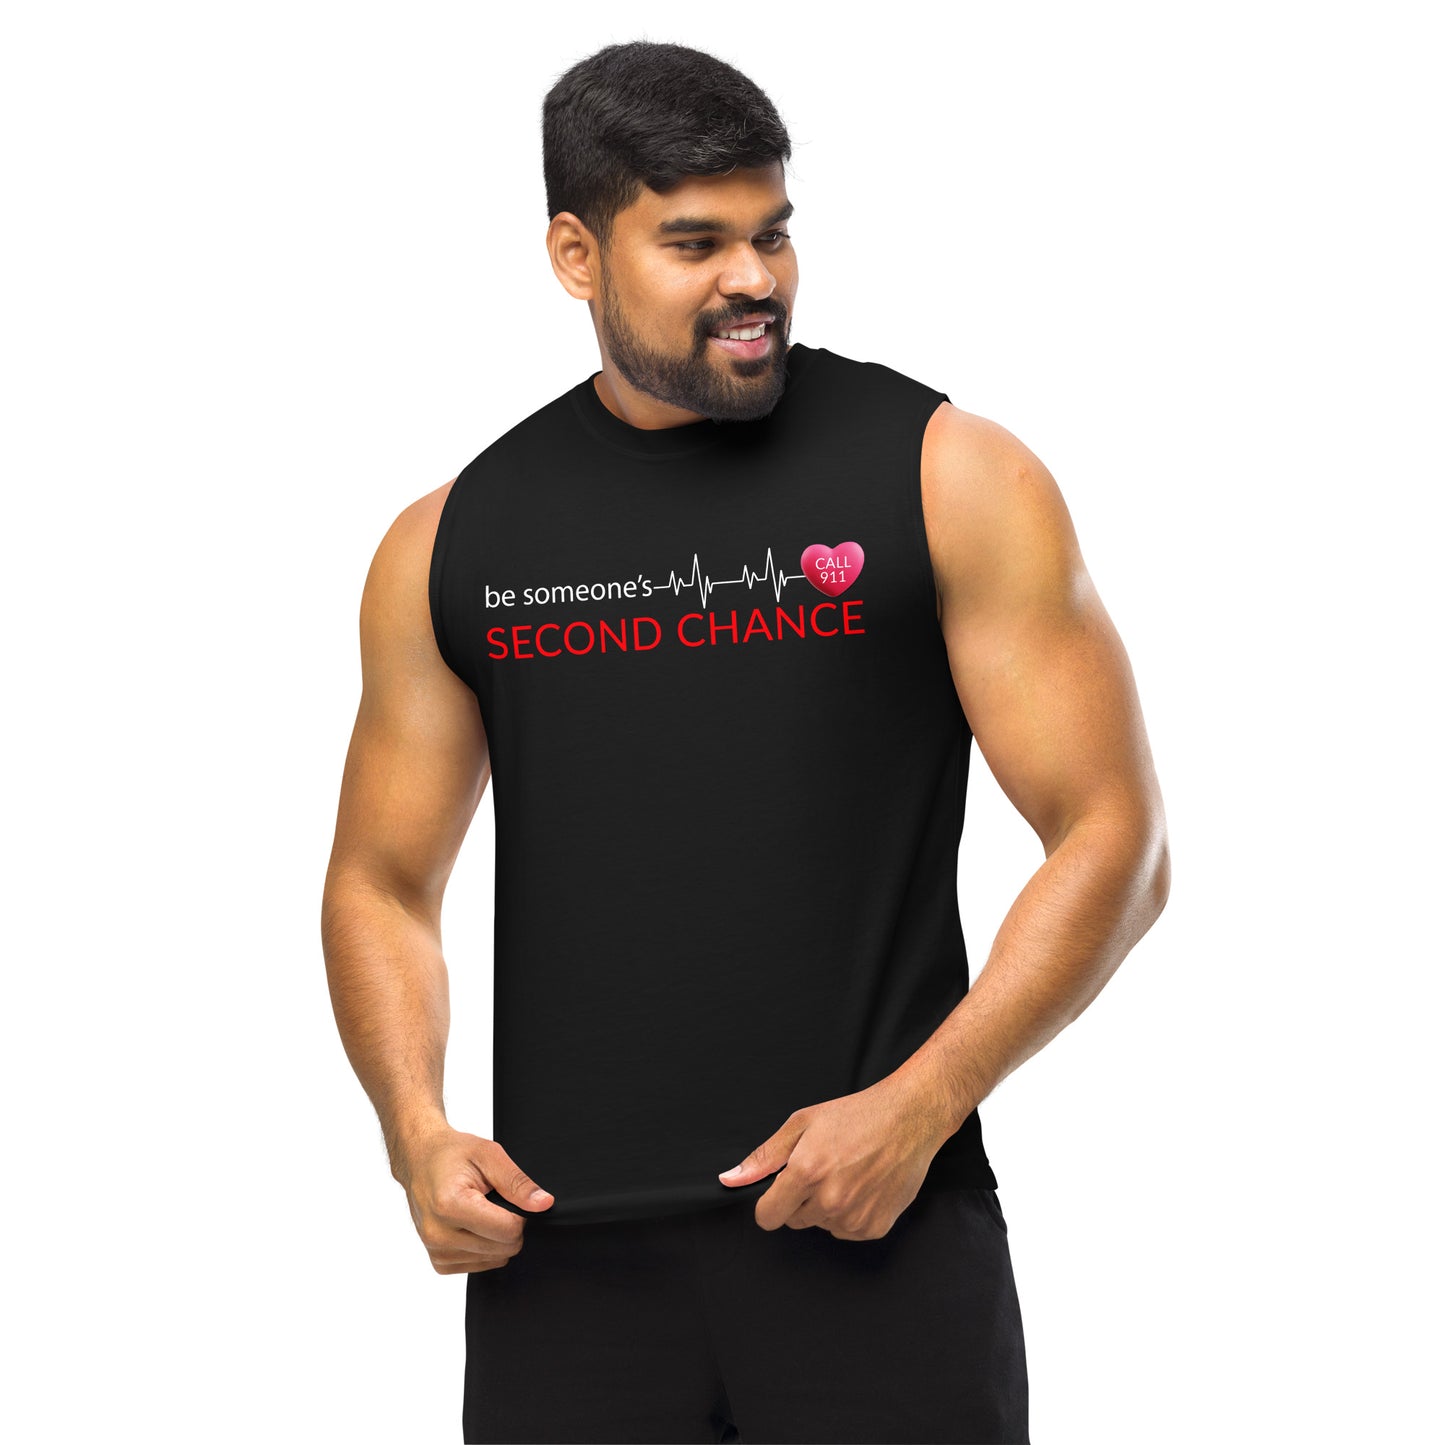 Unisex Muscle Shirt